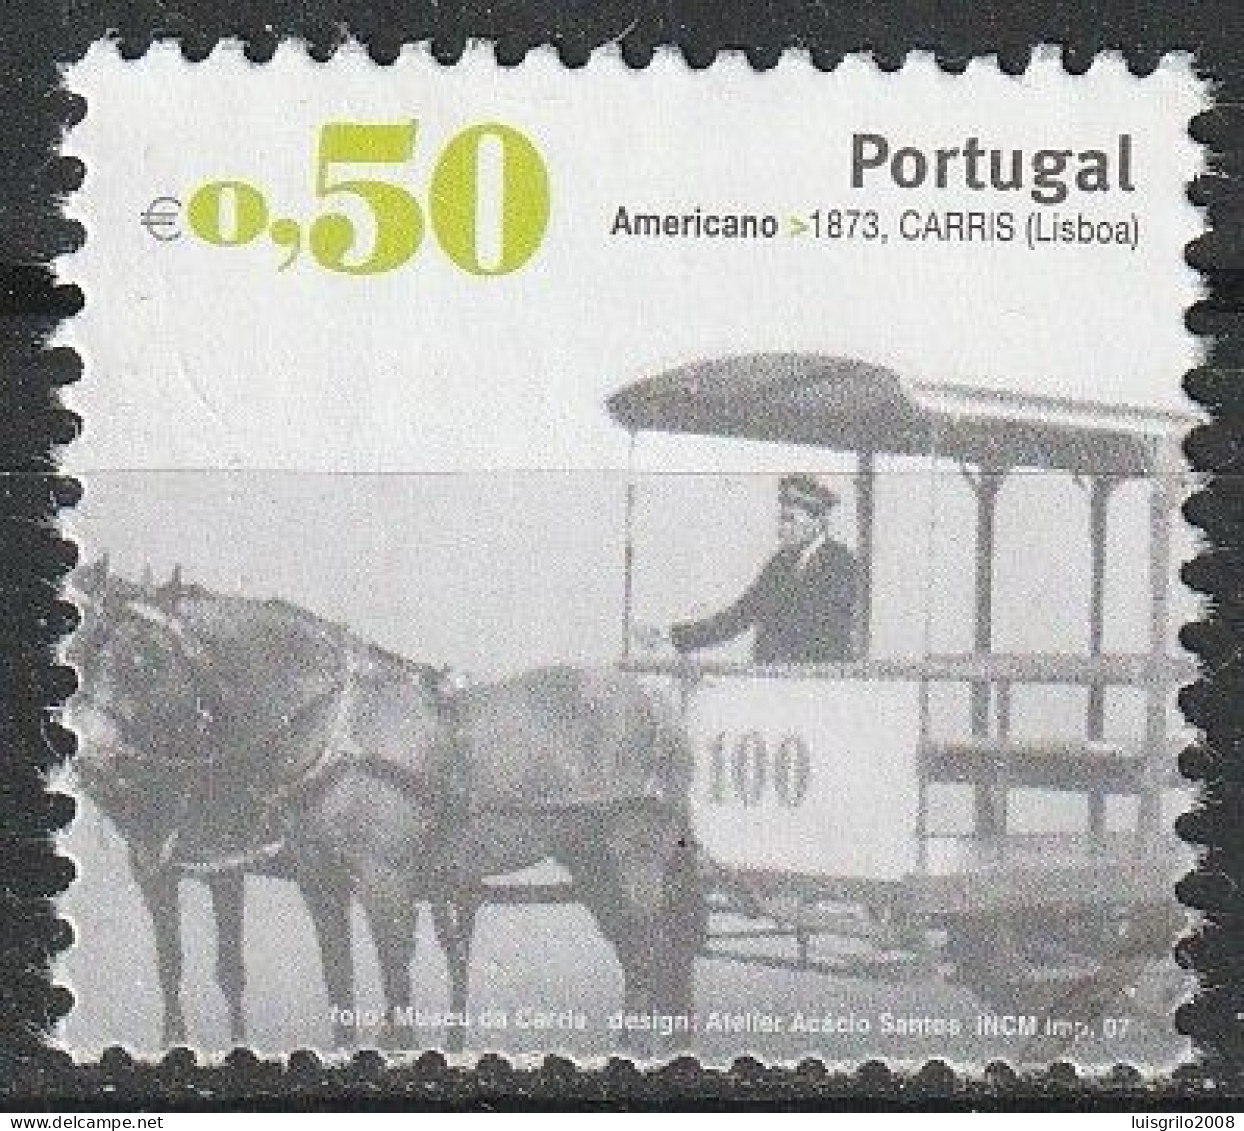 Portugal, 2007 - Transportes Colectivos, €0,50 -|- Mundifil - 3524 - Gebruikt